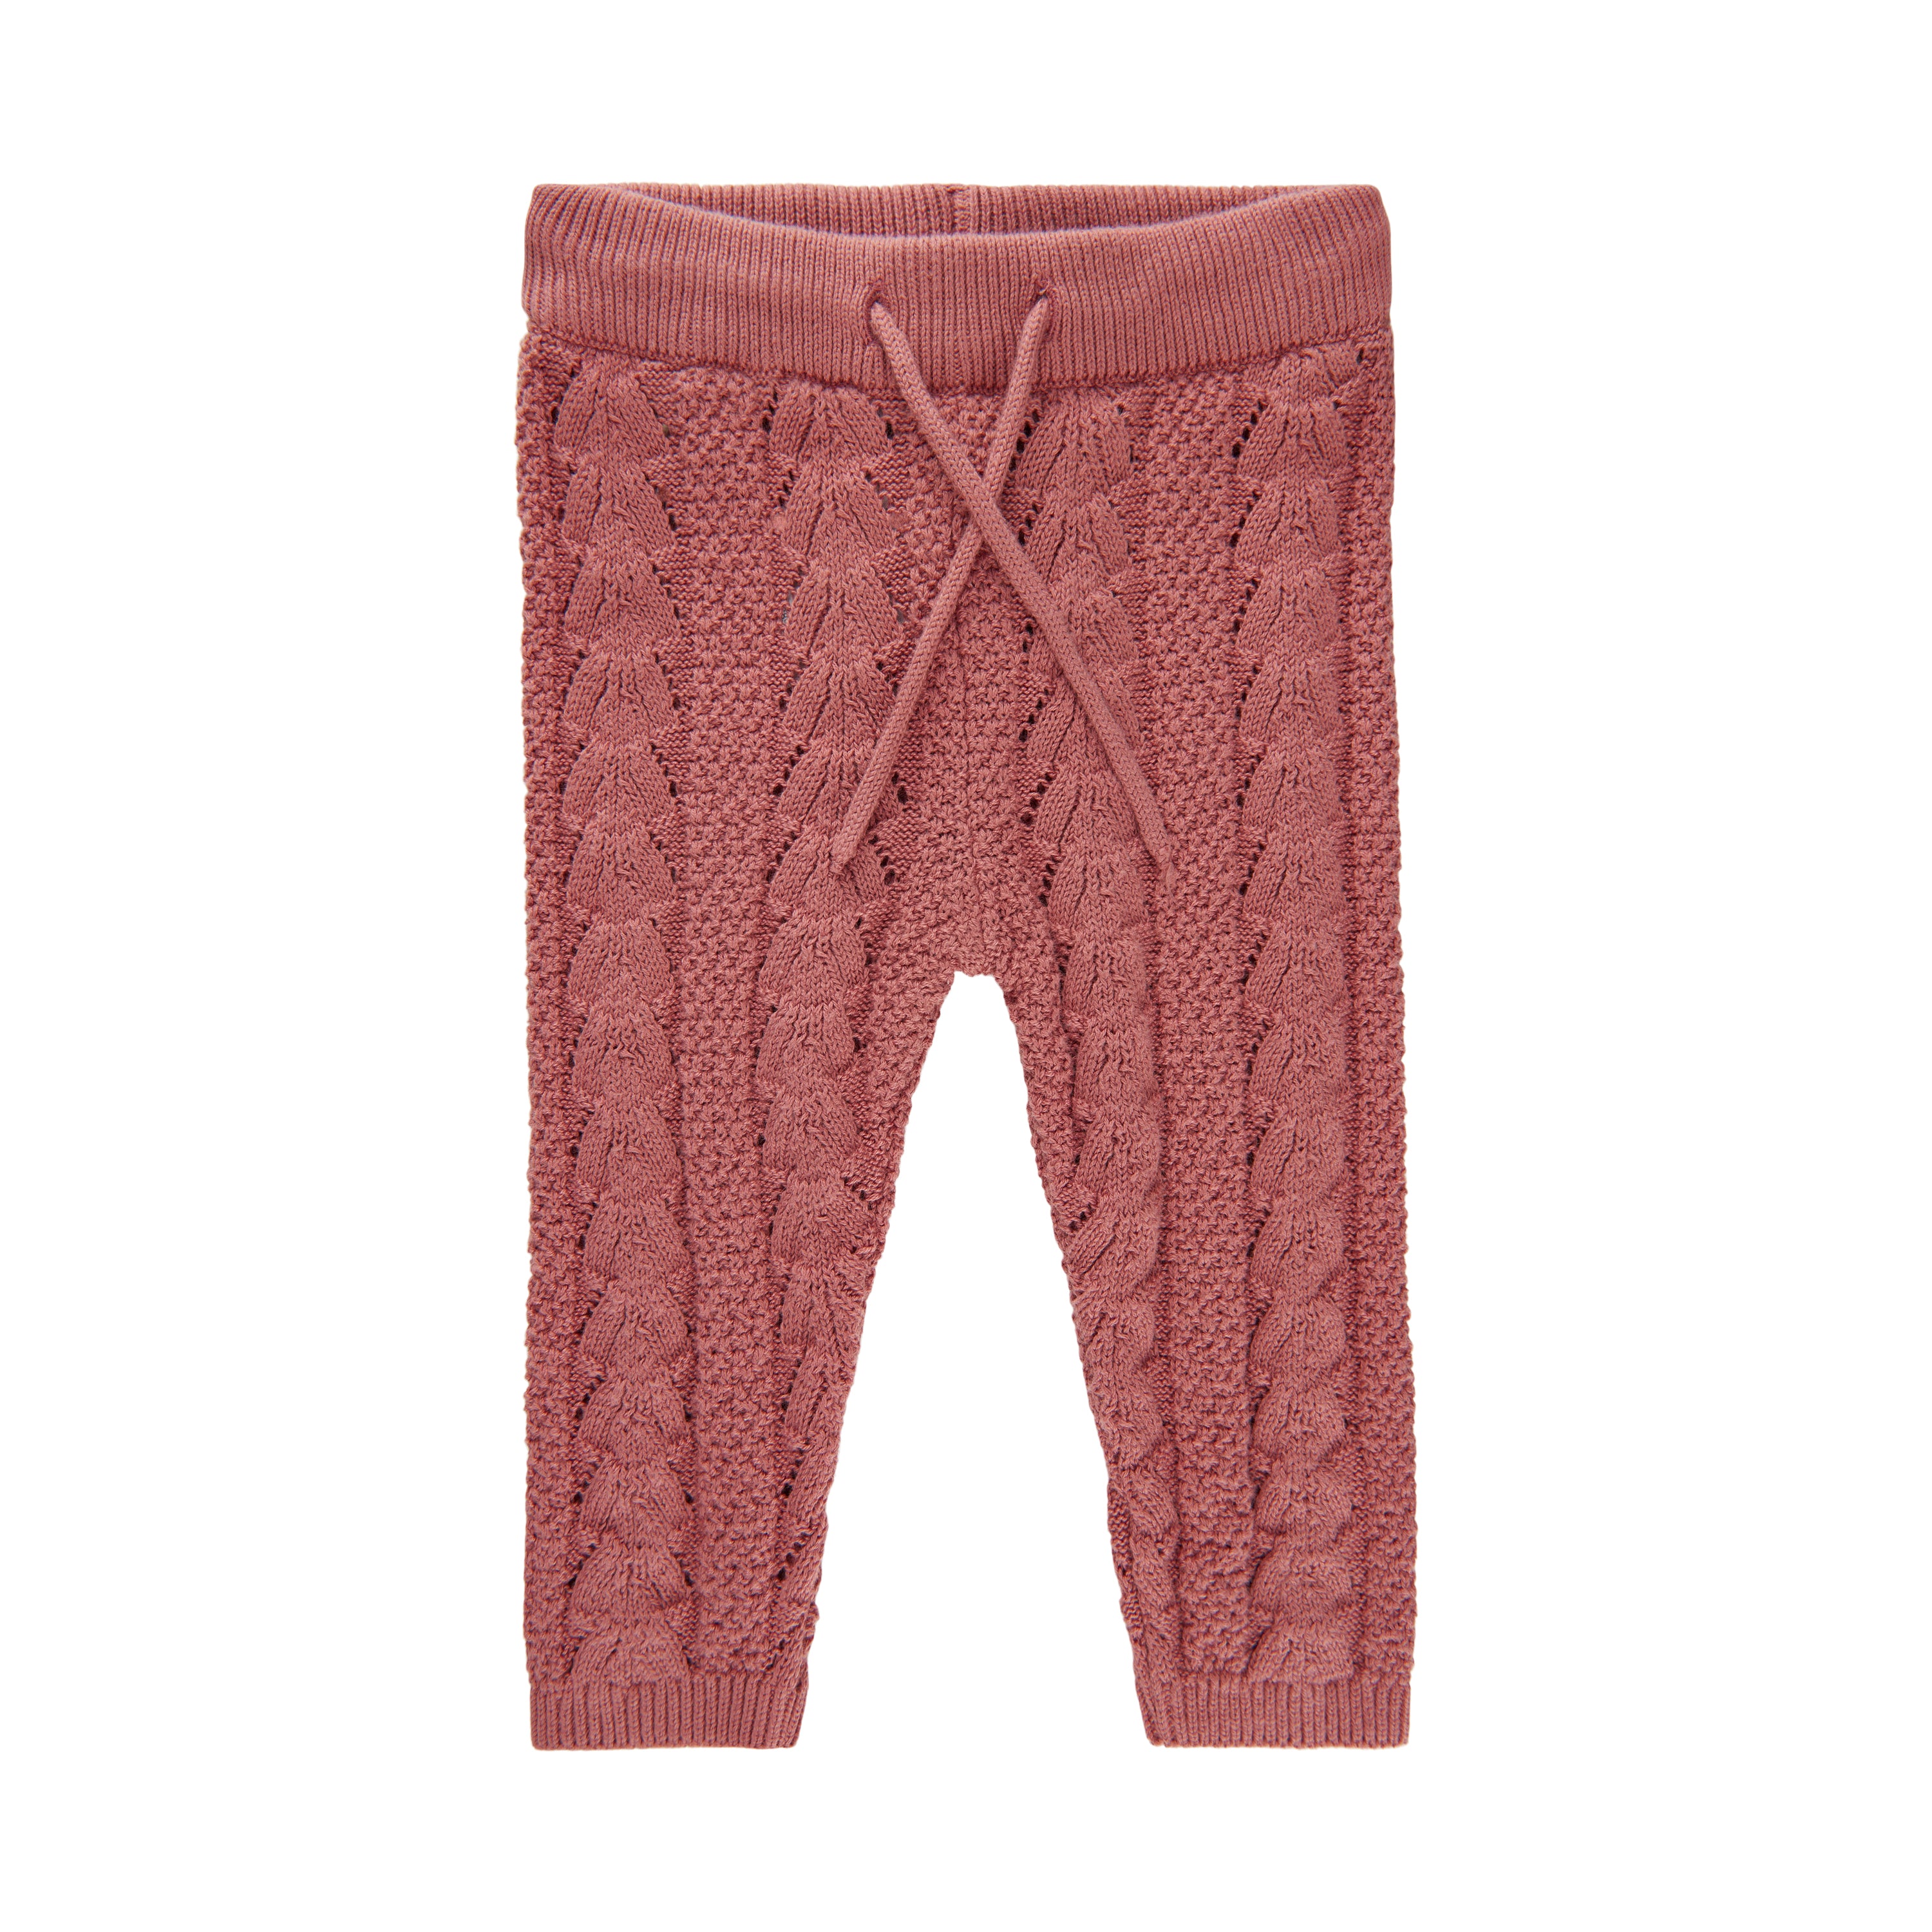 Fixoni - Pantalon en tricot- vieux rose, 9 mois